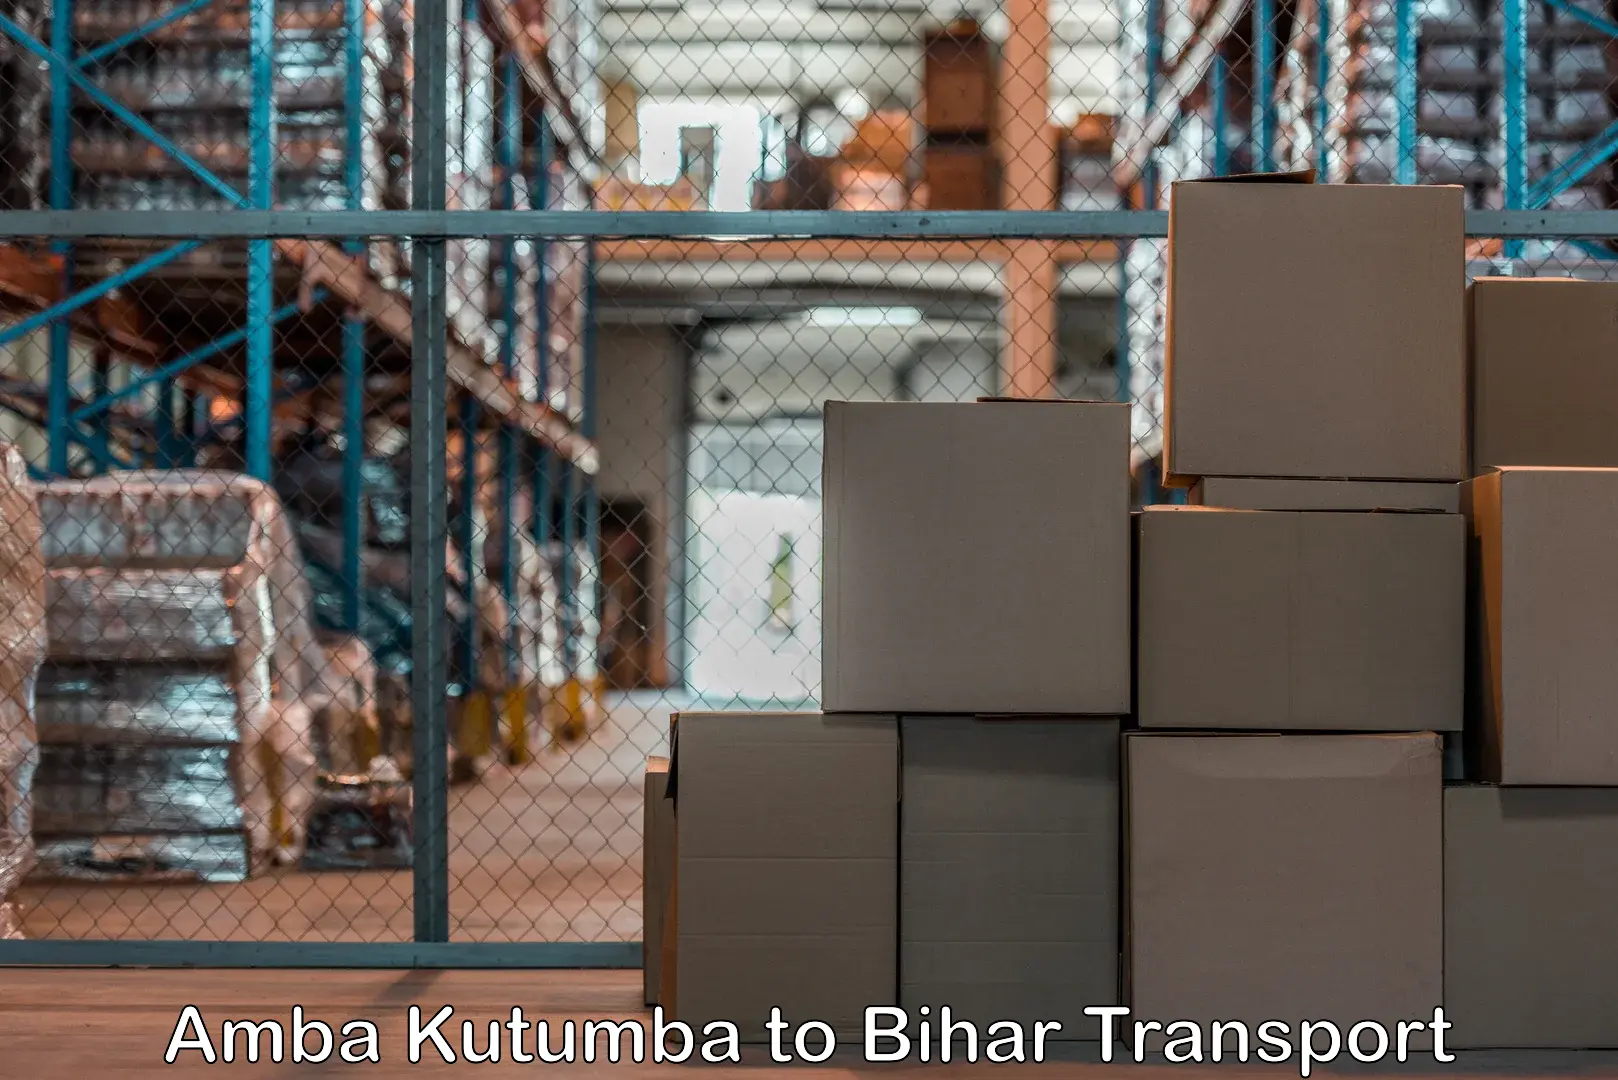 Furniture transport service in Amba Kutumba to Rusera